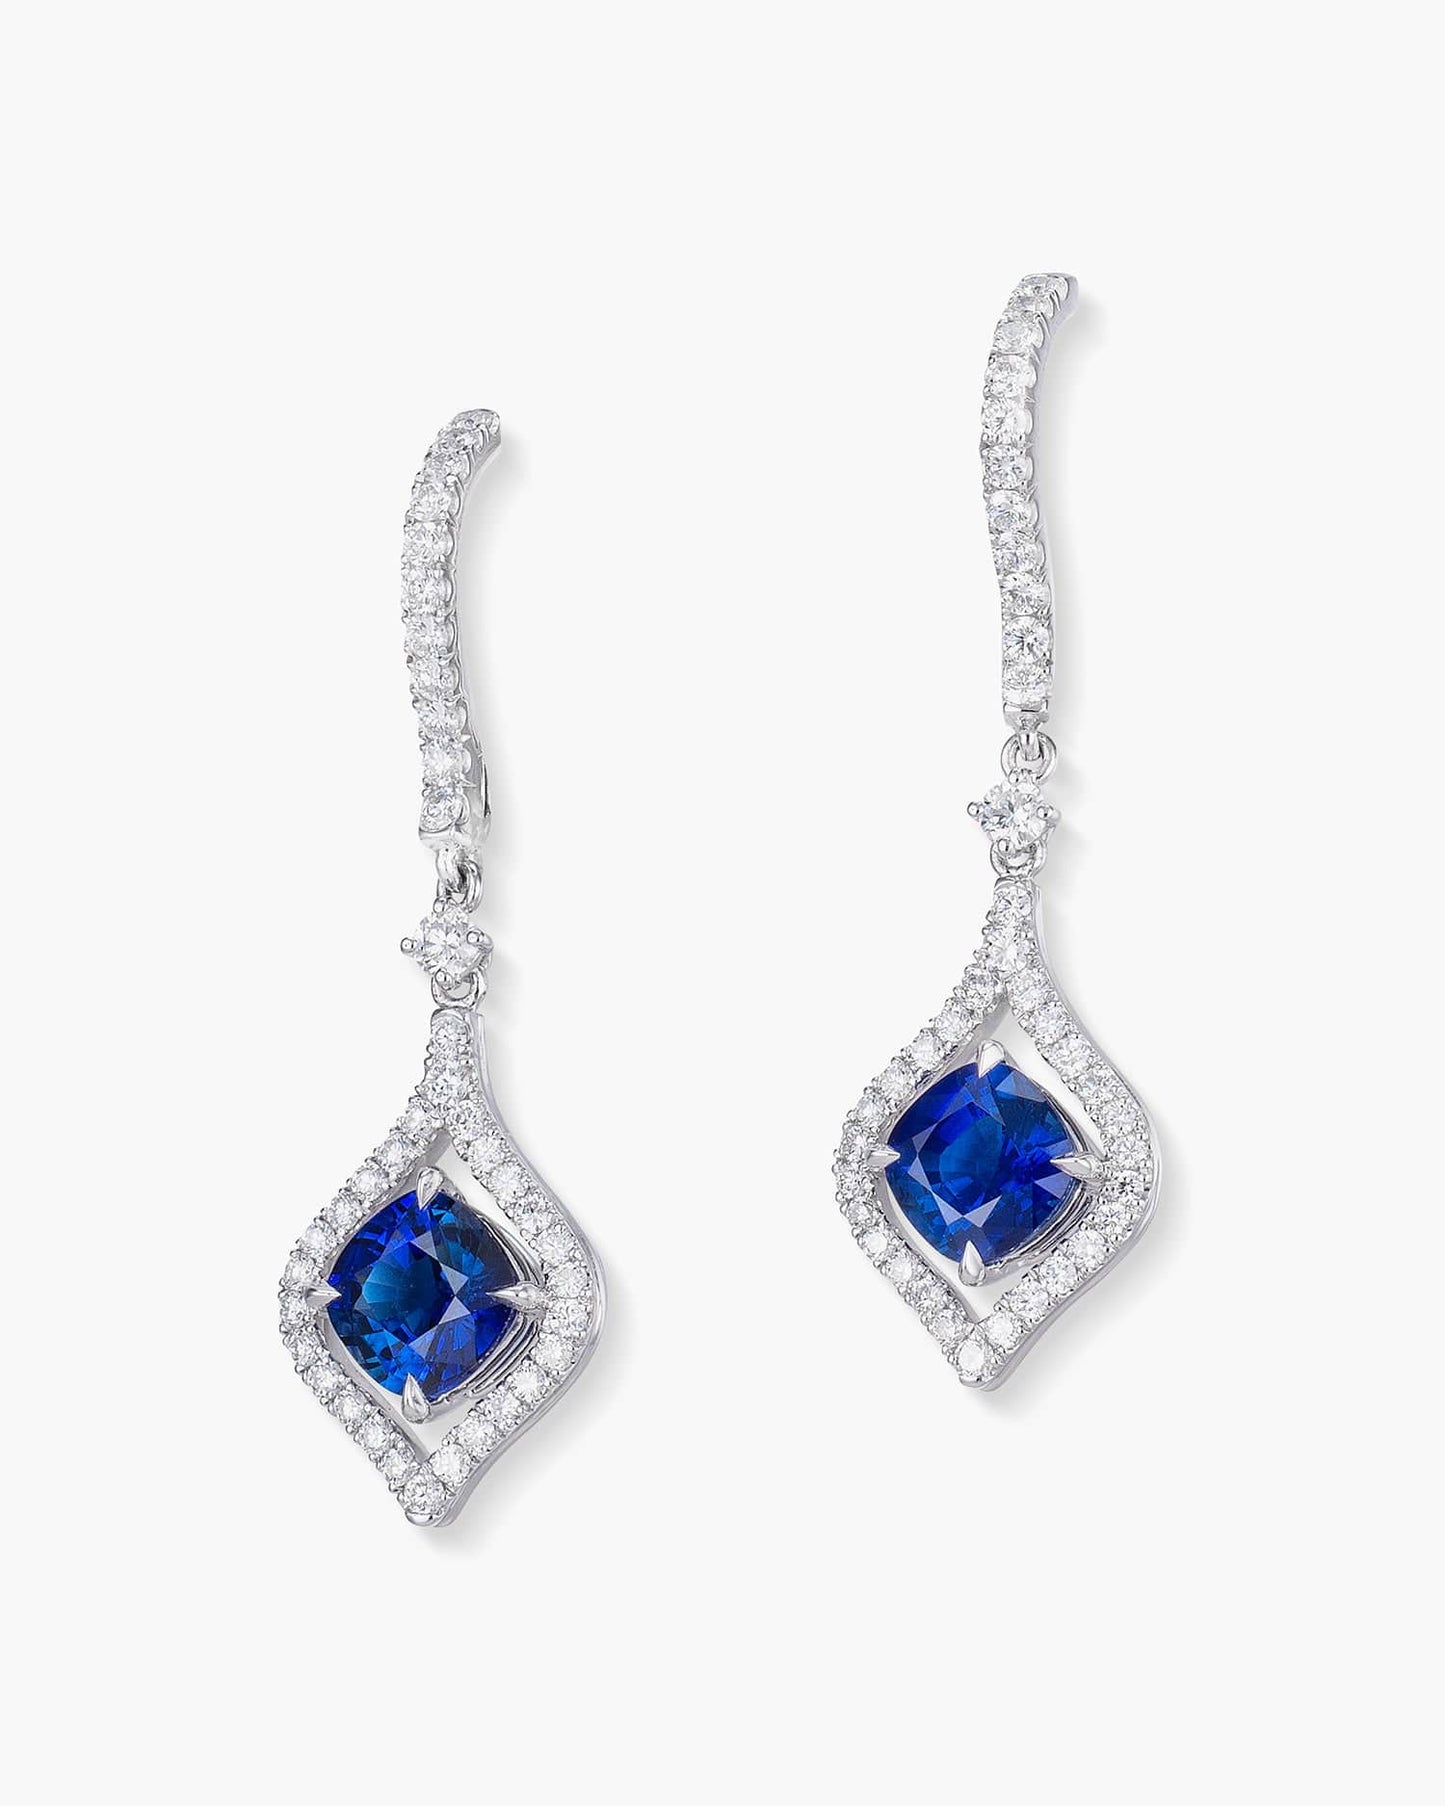 2.00 carat Cushion Cut Sapphire and Diamond Earrings